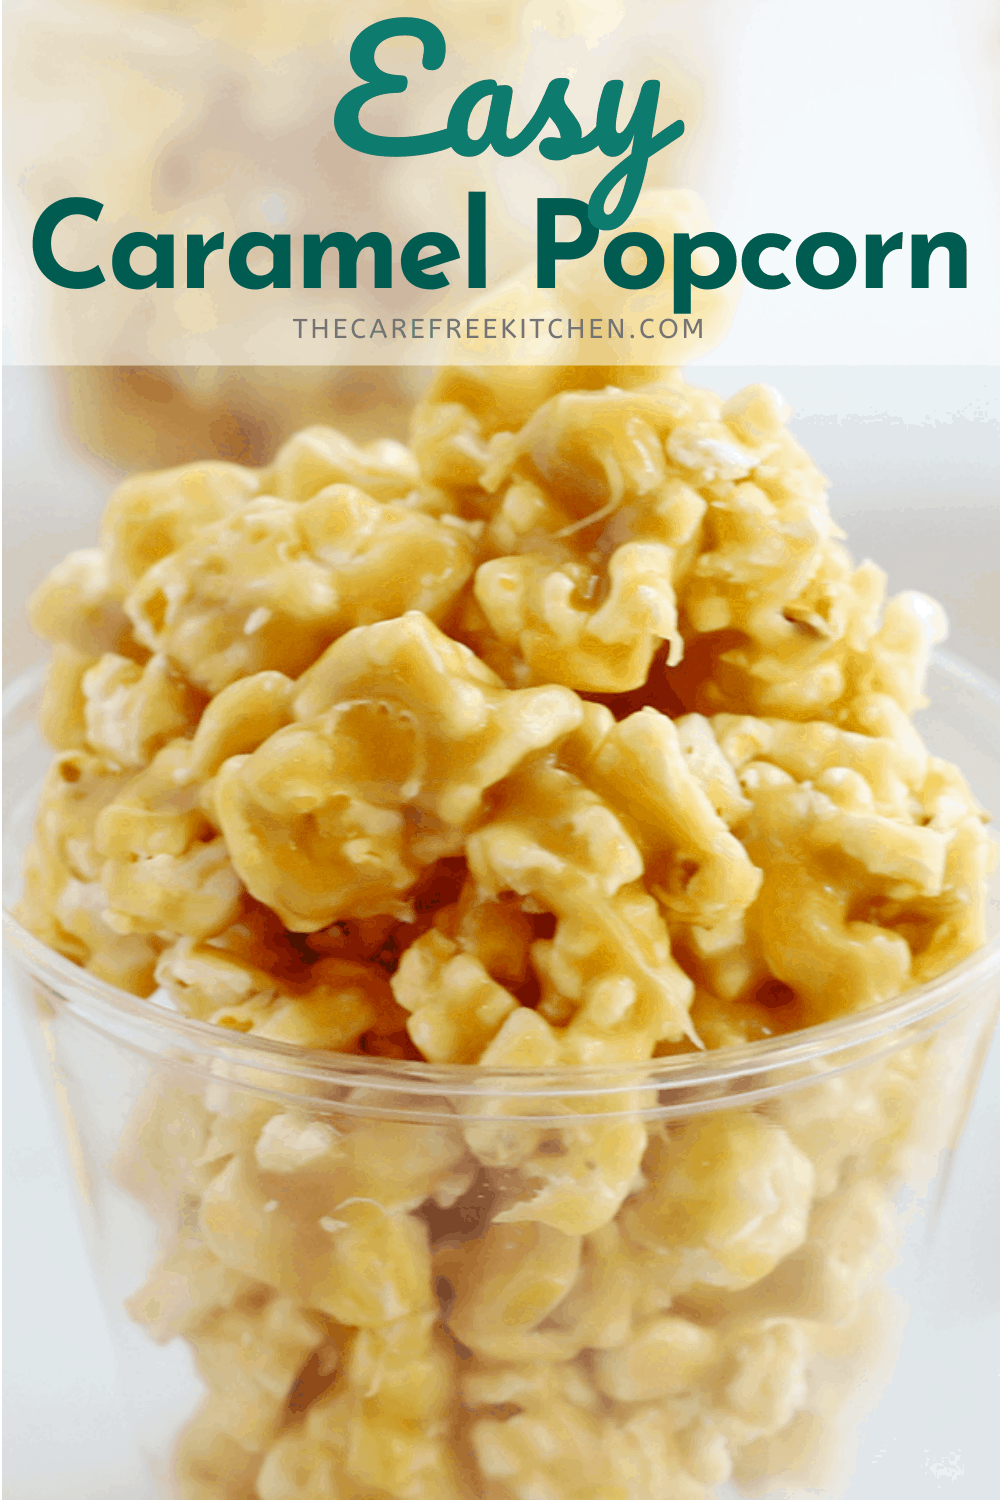 how to make the best caramel popcorn, easy no bake dessert recipe.